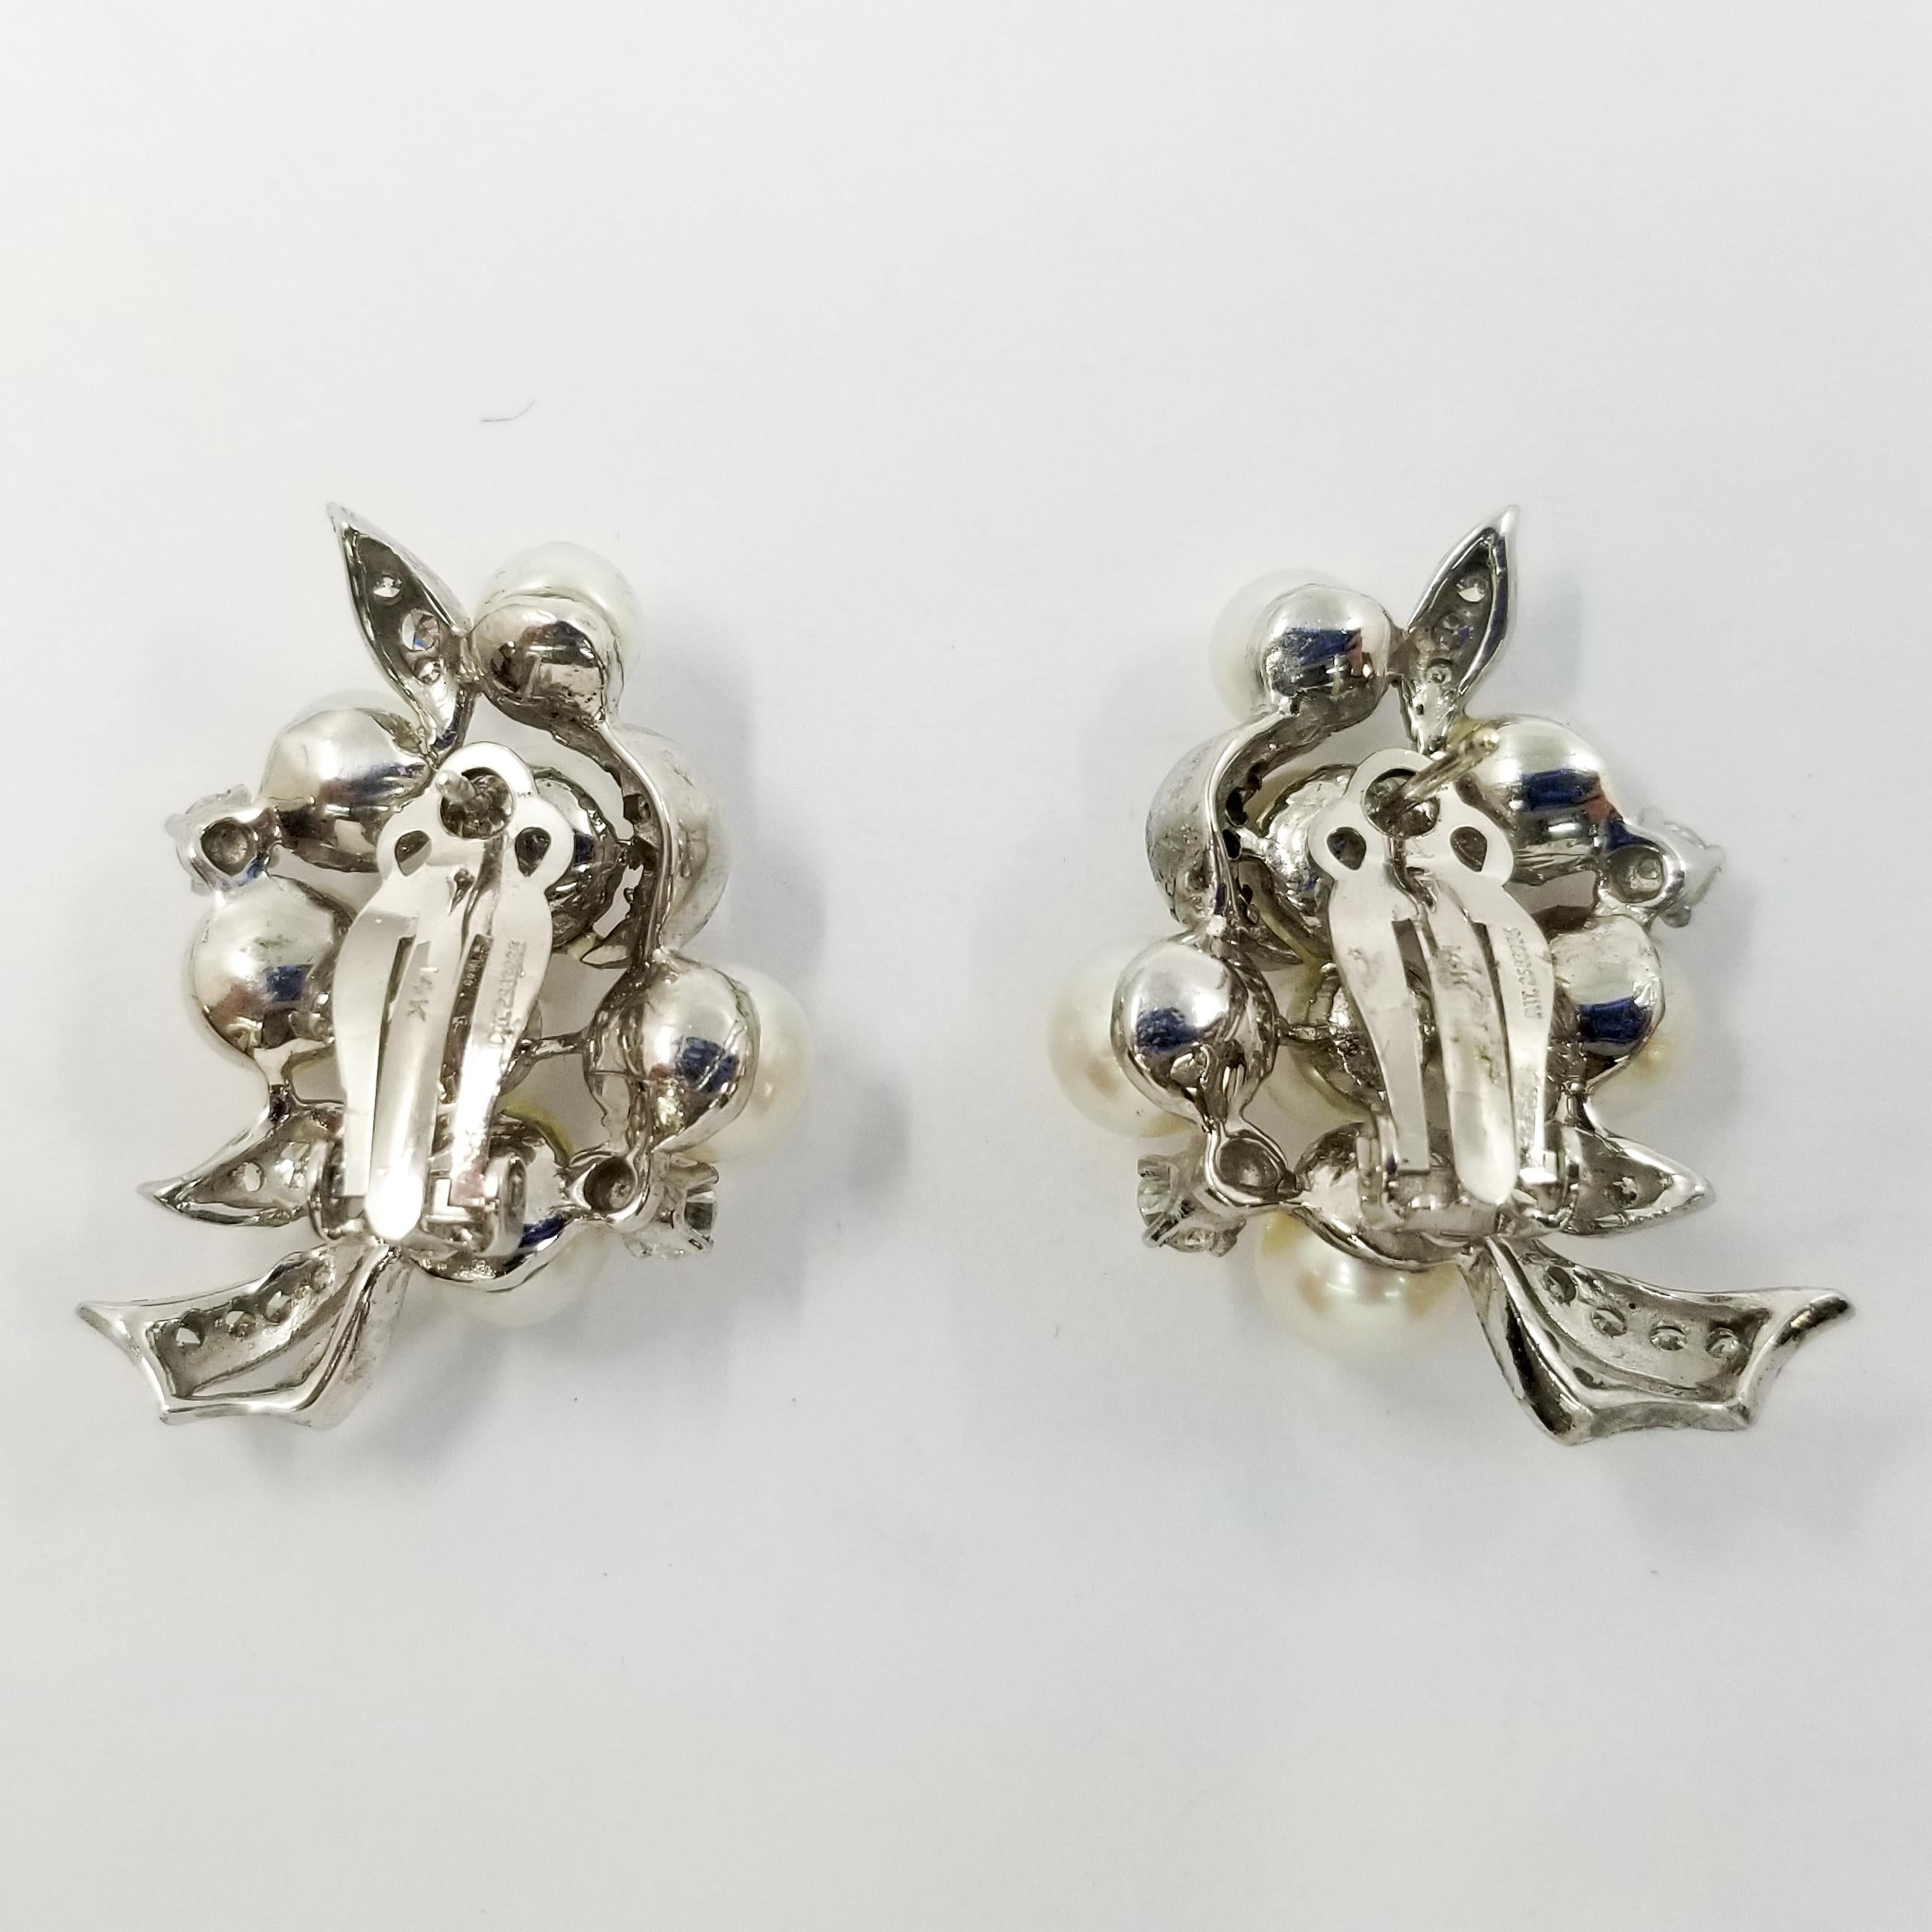 vintage pearl and diamond earrings